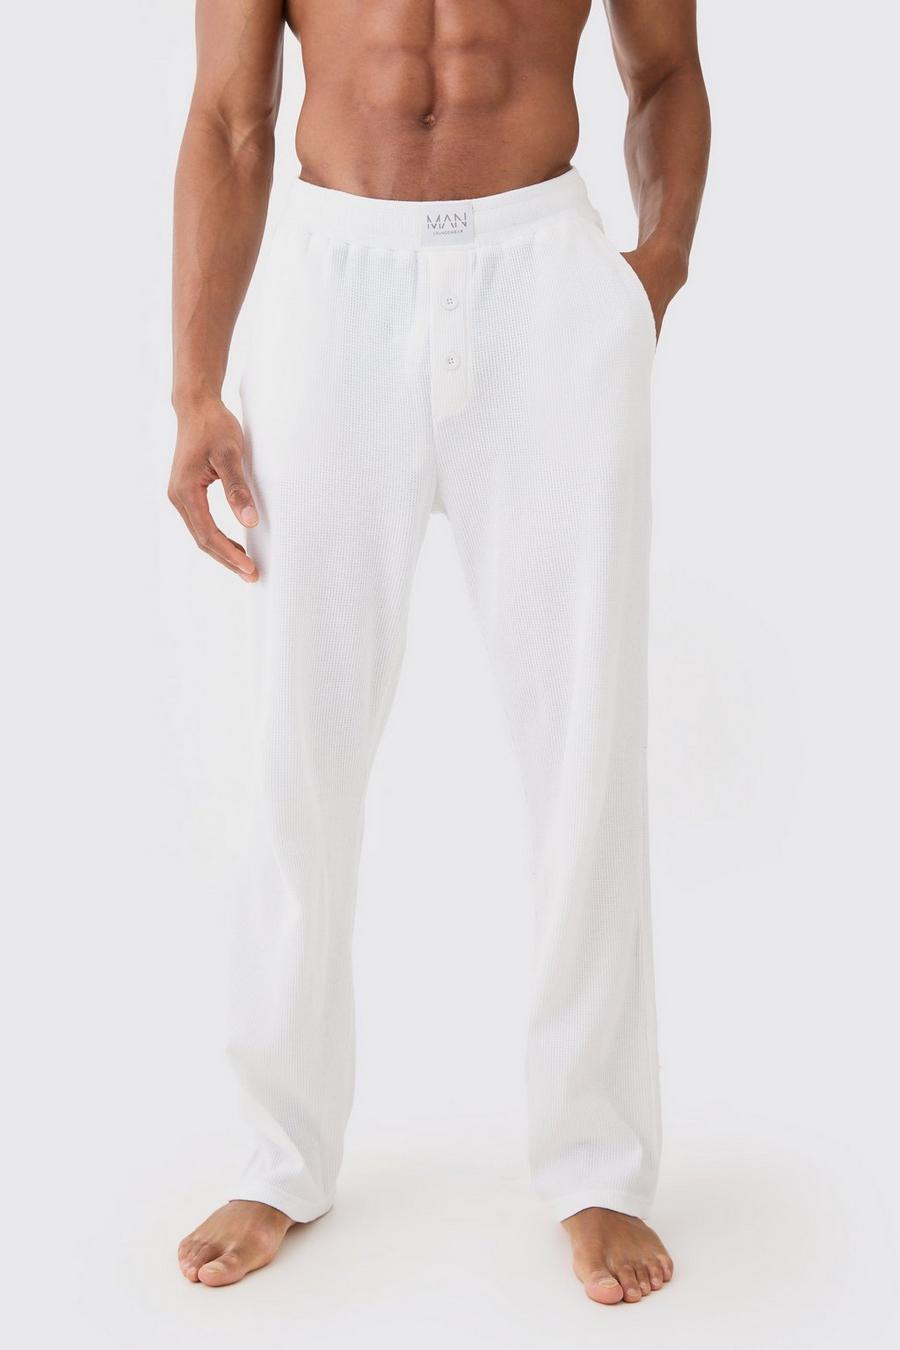 Lockere weiße Loungewear-Hose in Waffeloptik, White